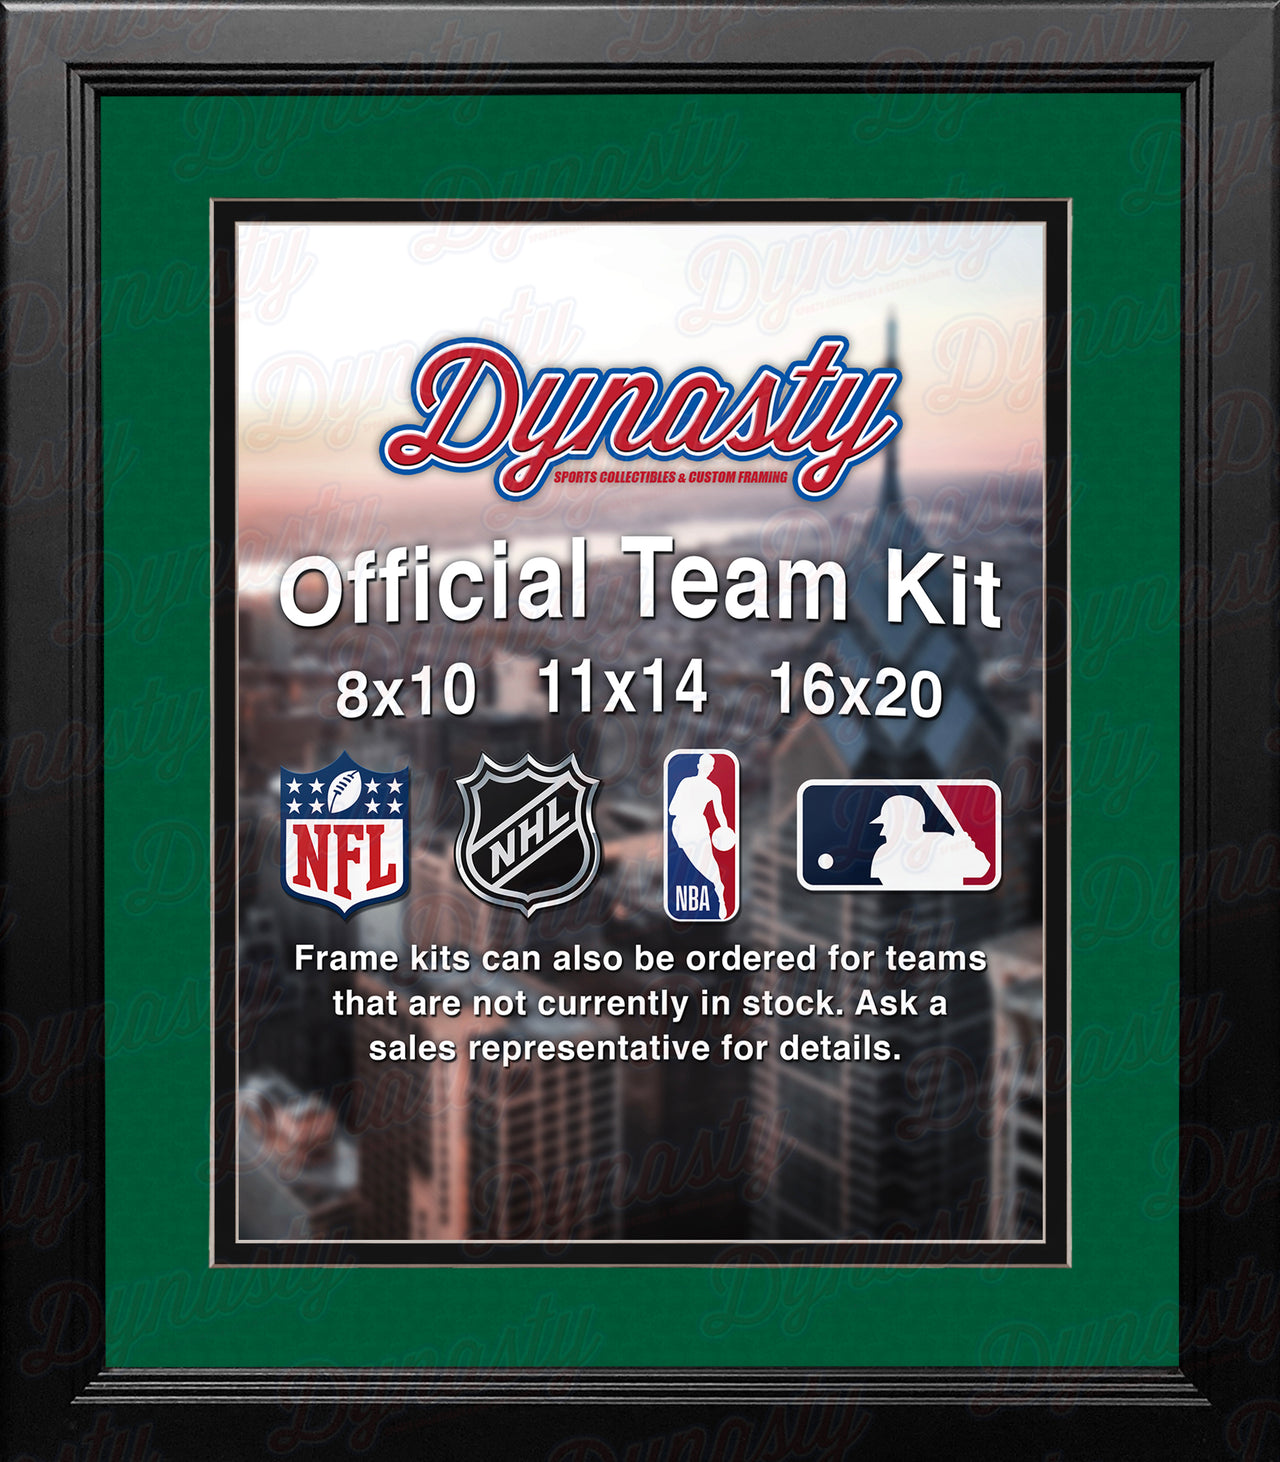 NHL Hockey Photo Picture Frame Kit - Dallas Stars (Green Matting, Black Trim) - Dynasty Sports & Framing 